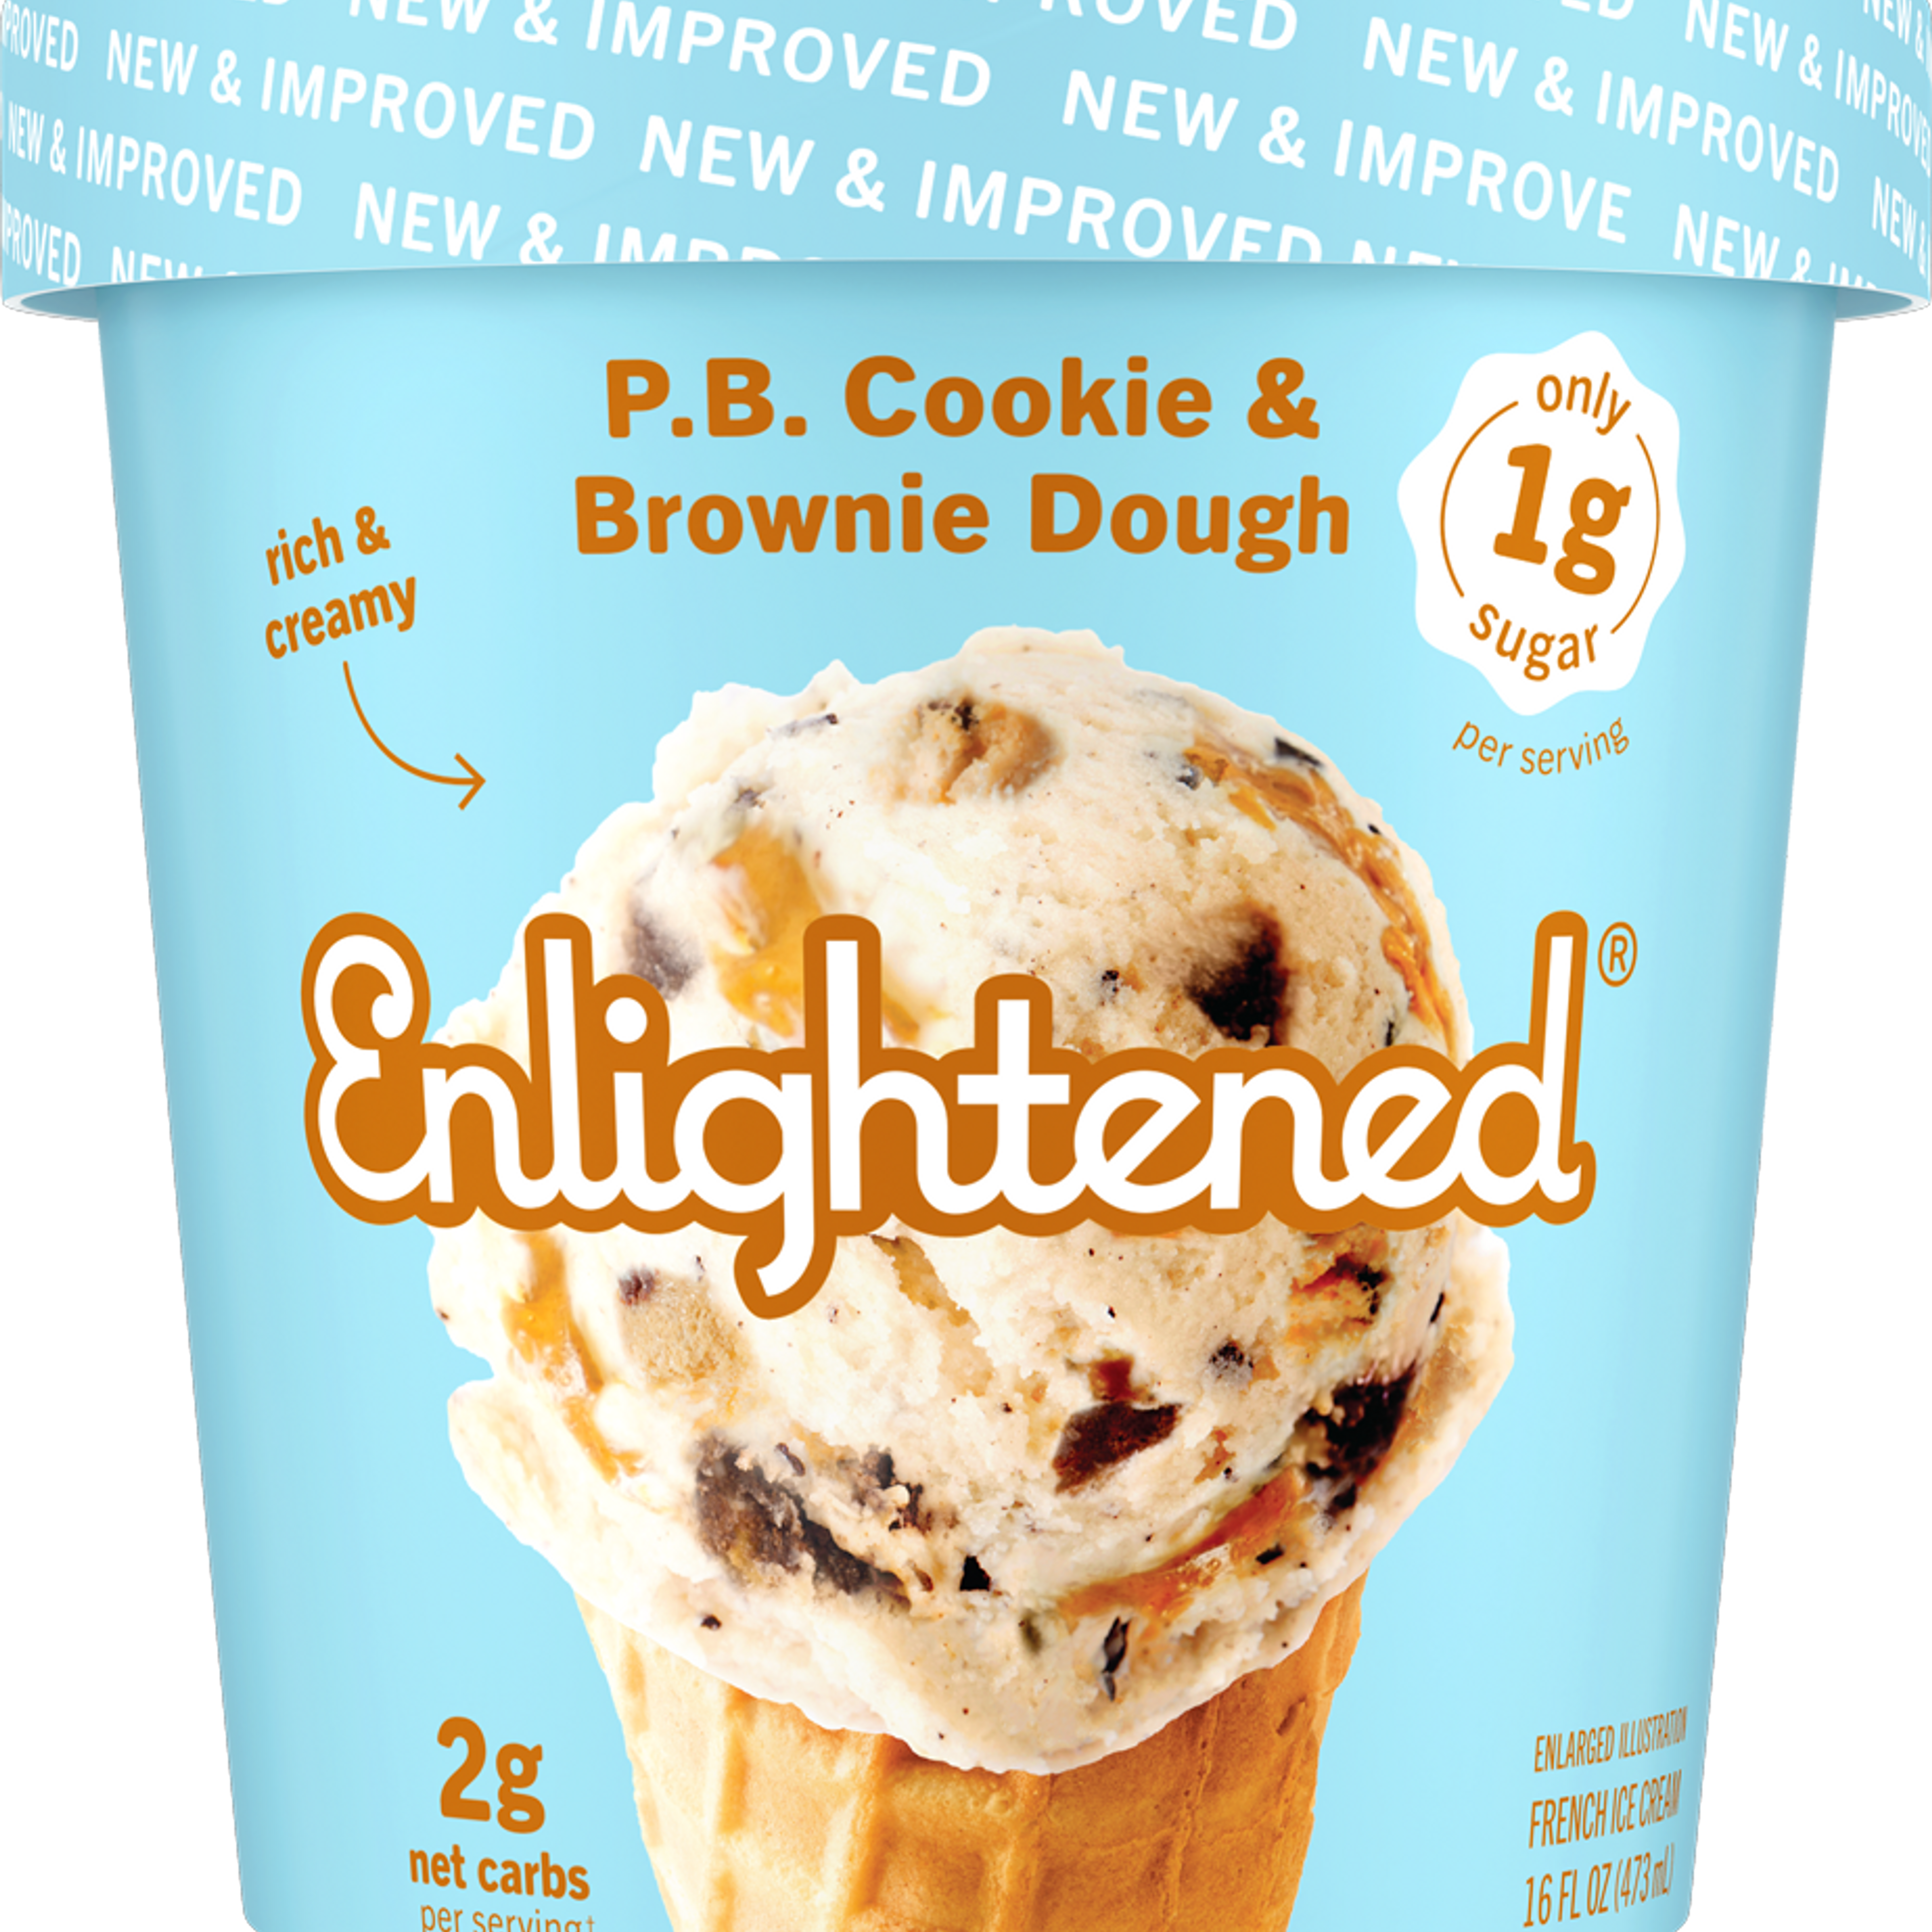 P.B. Cookie & Brownie Dough Ice Cream Pint